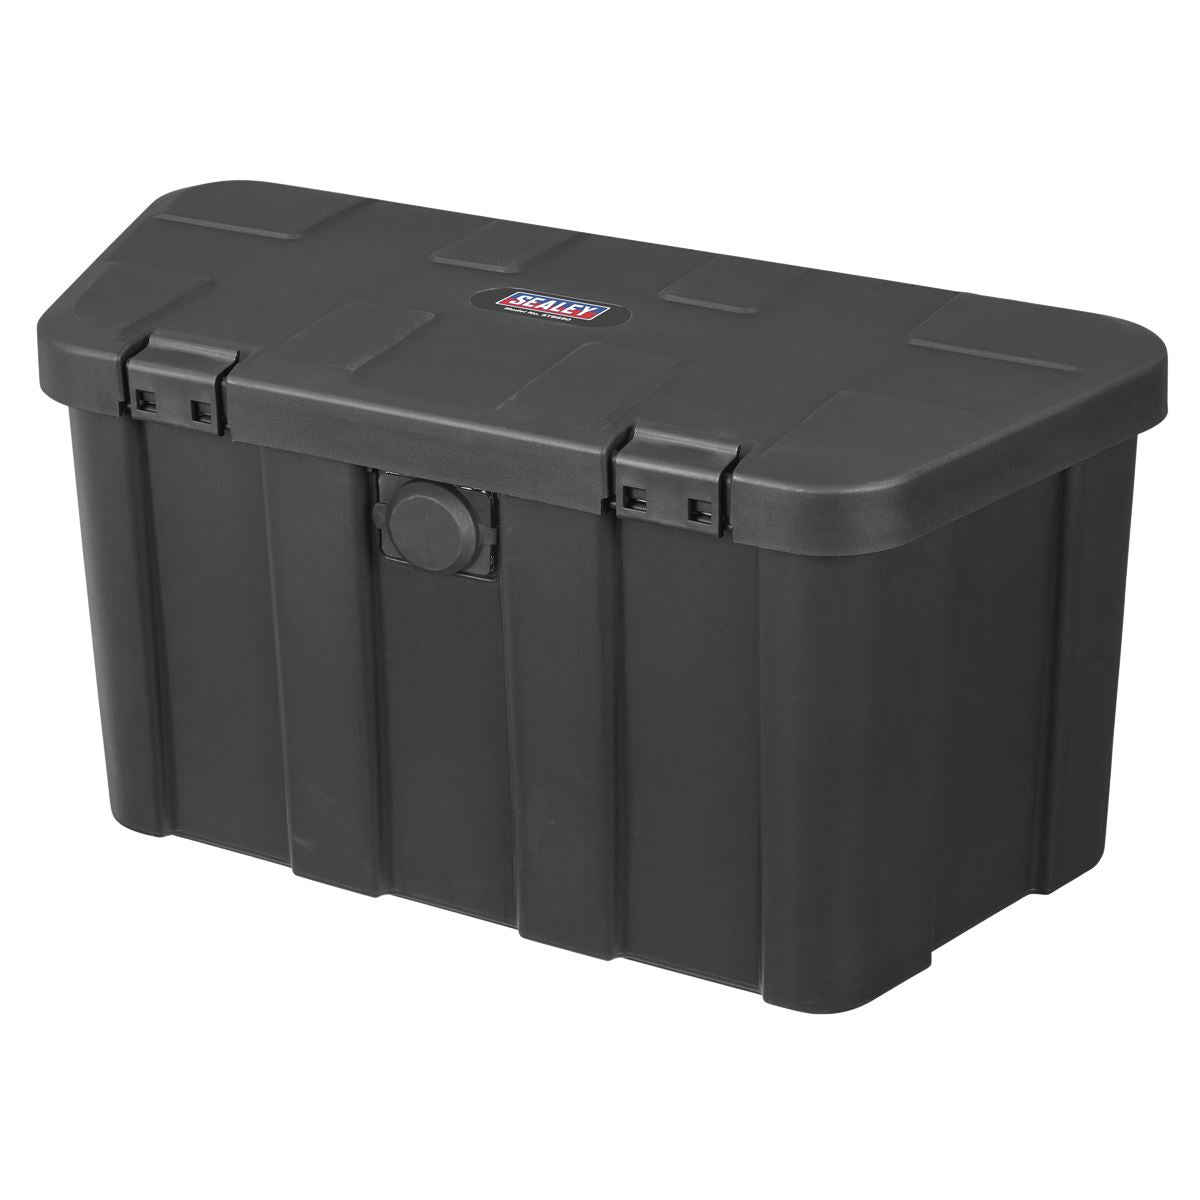 Sealey Weatherproof Trailer Storage Box with Lock 45L